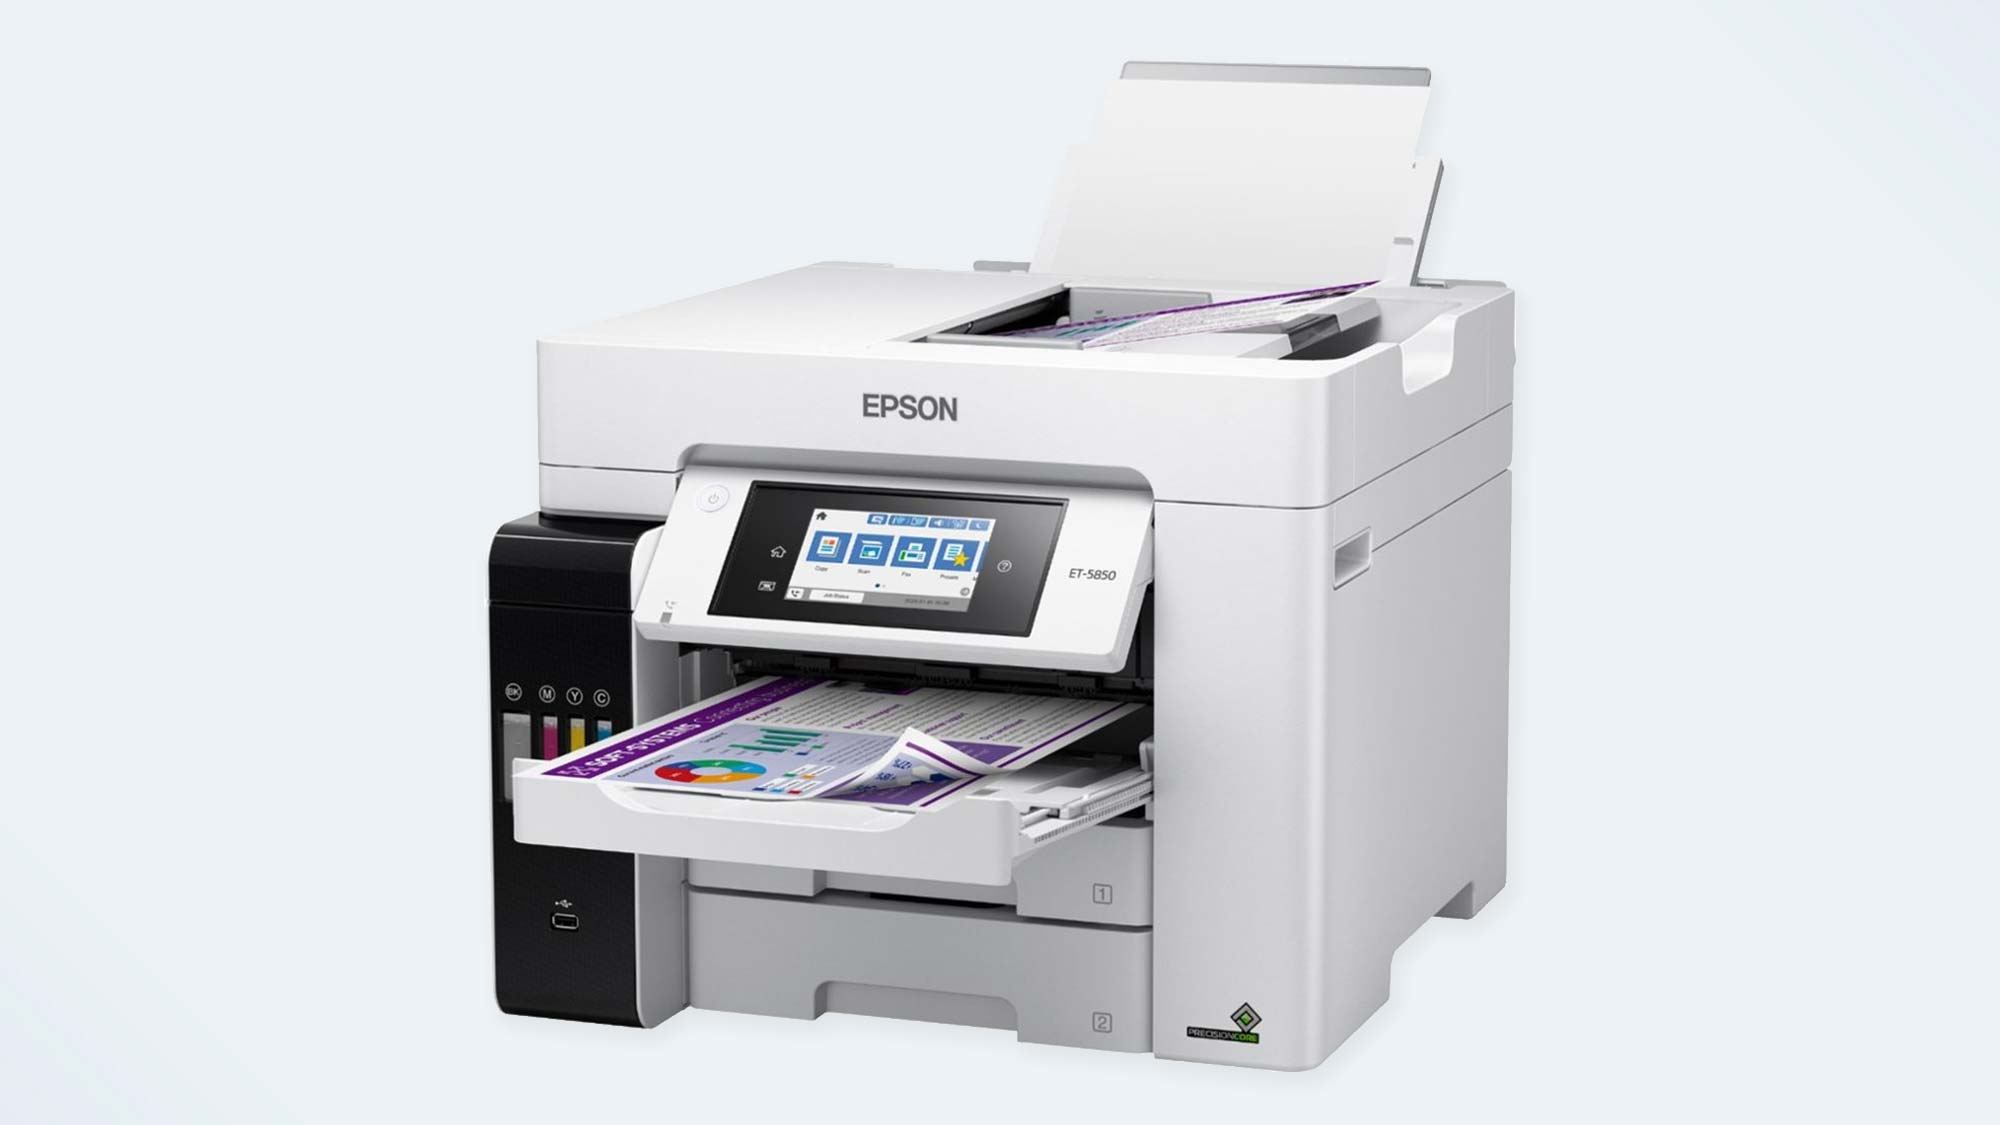 Epson EcoTank Pro ET-5850 small business printer